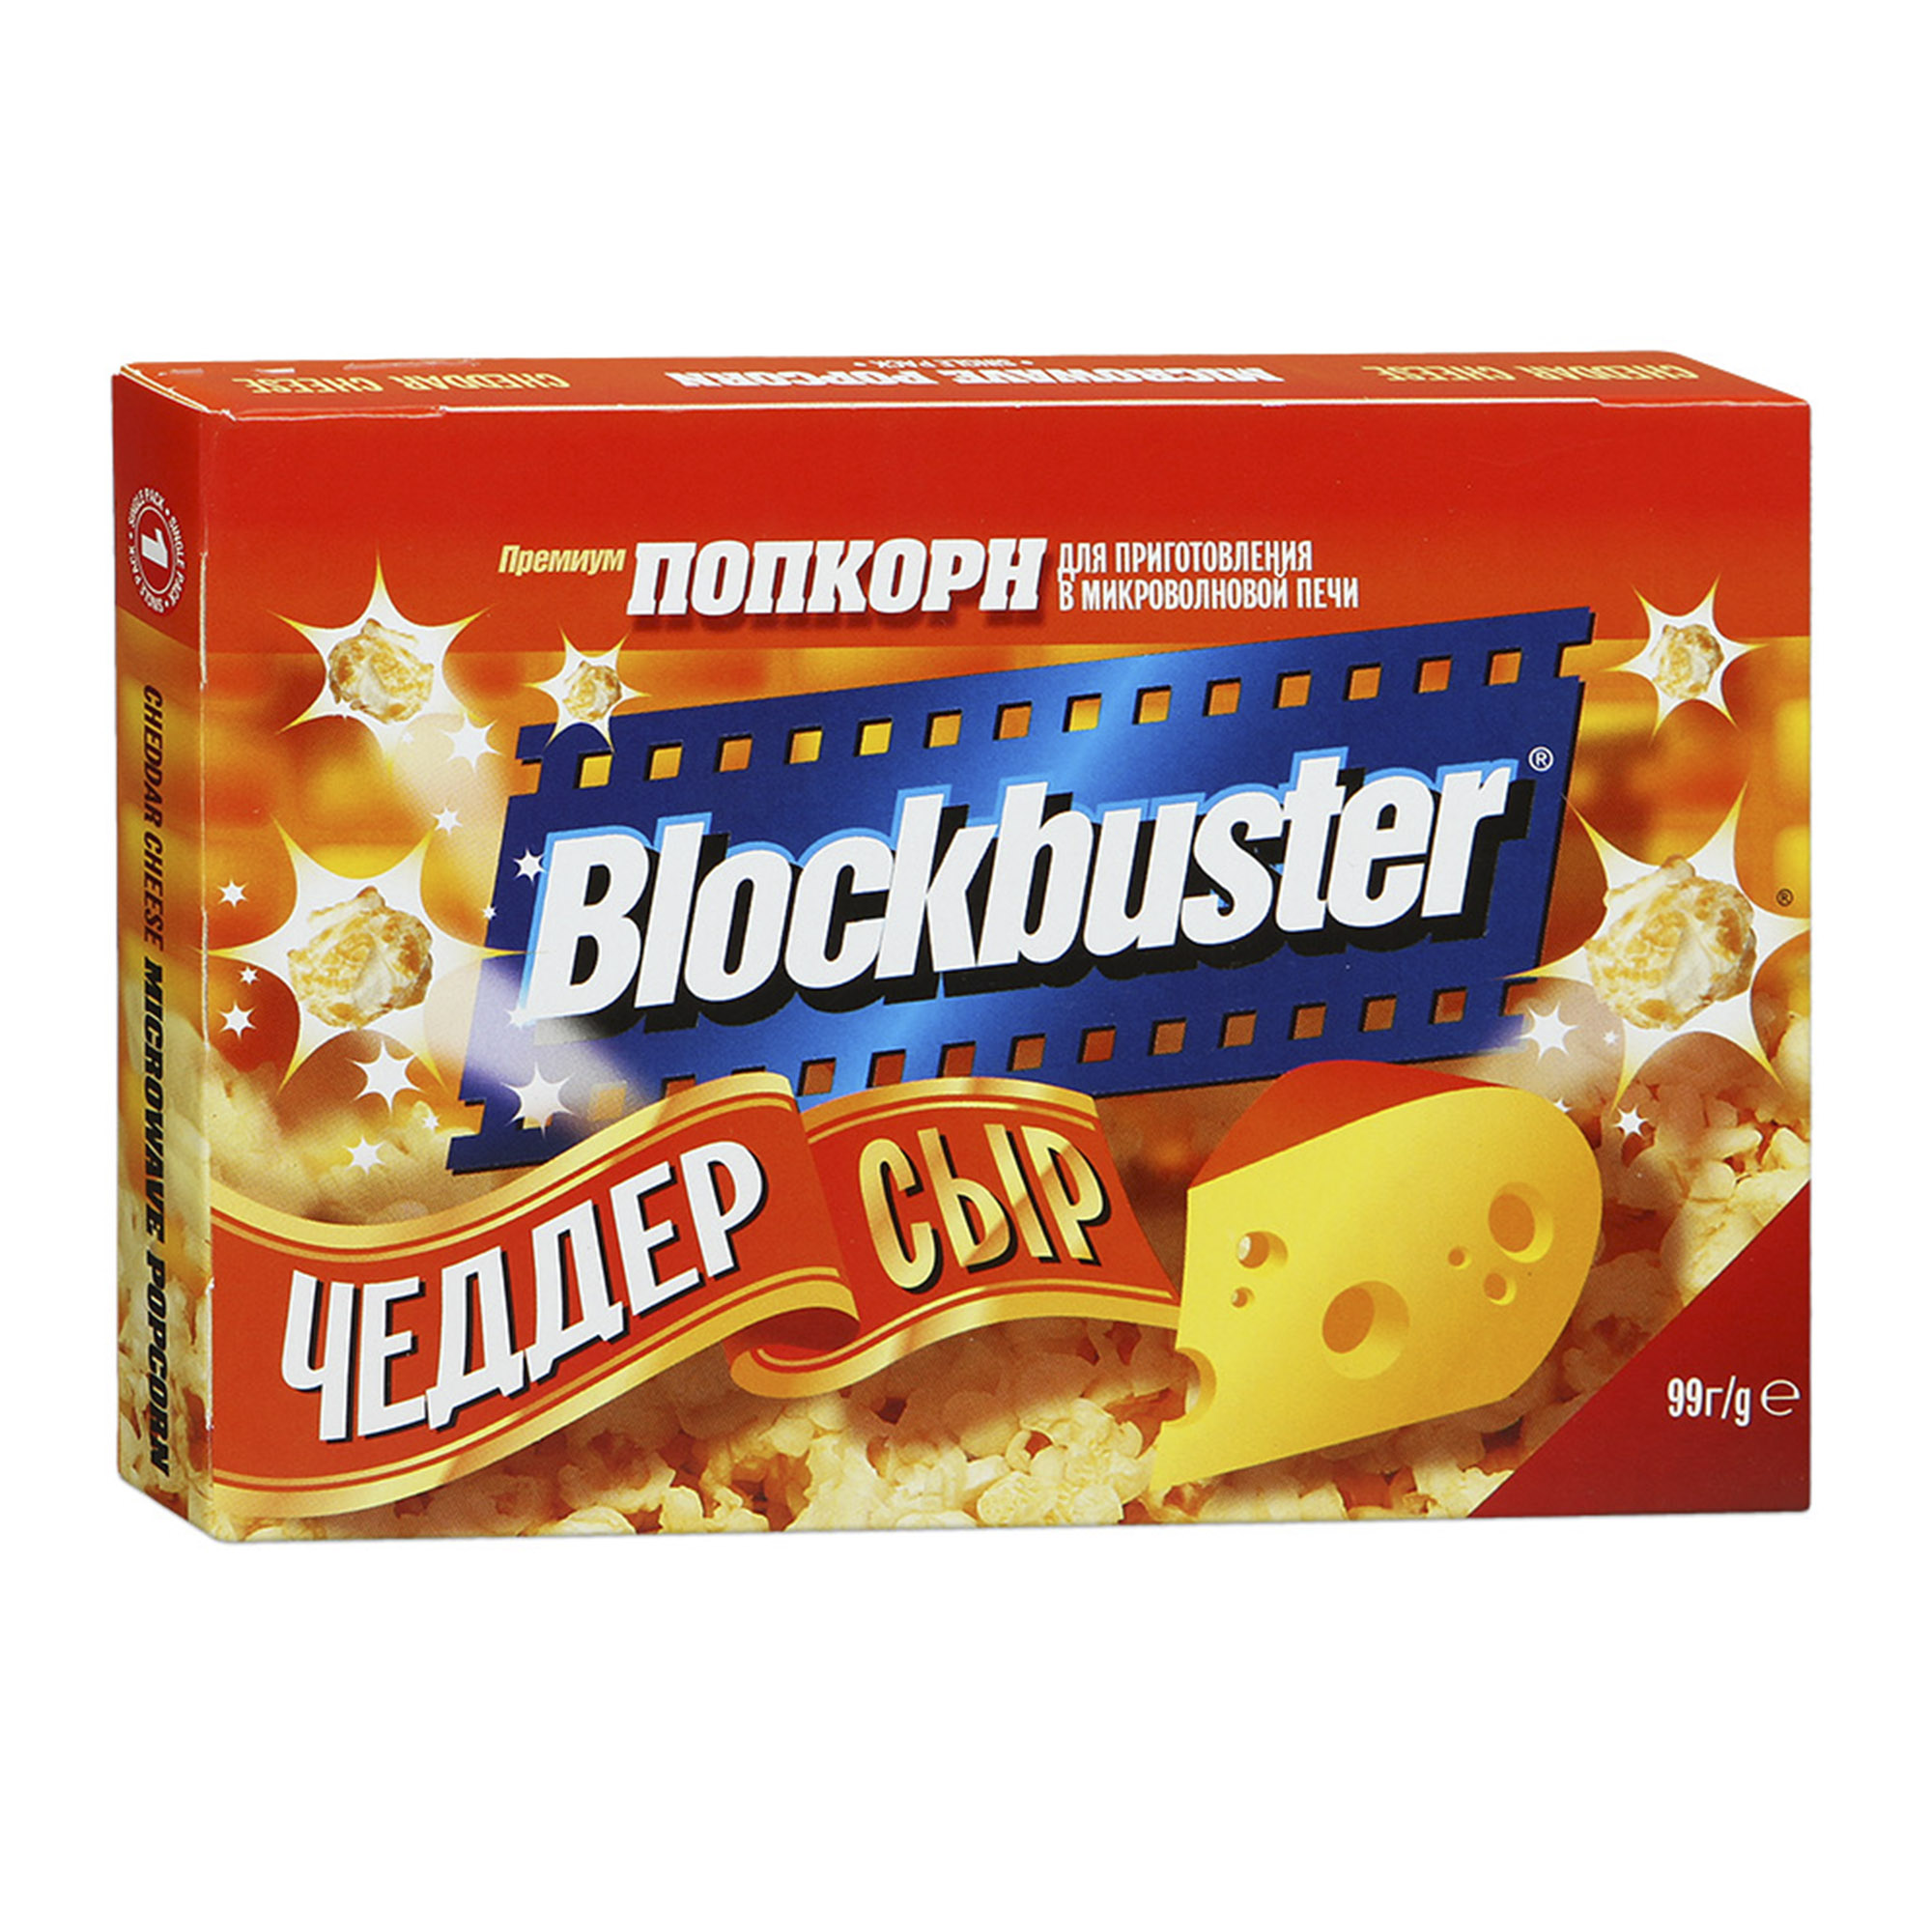 Попкорн Blockbuster с сыром Чеддер 90 г попкорн blockbuster с сыром чеддер 90 г